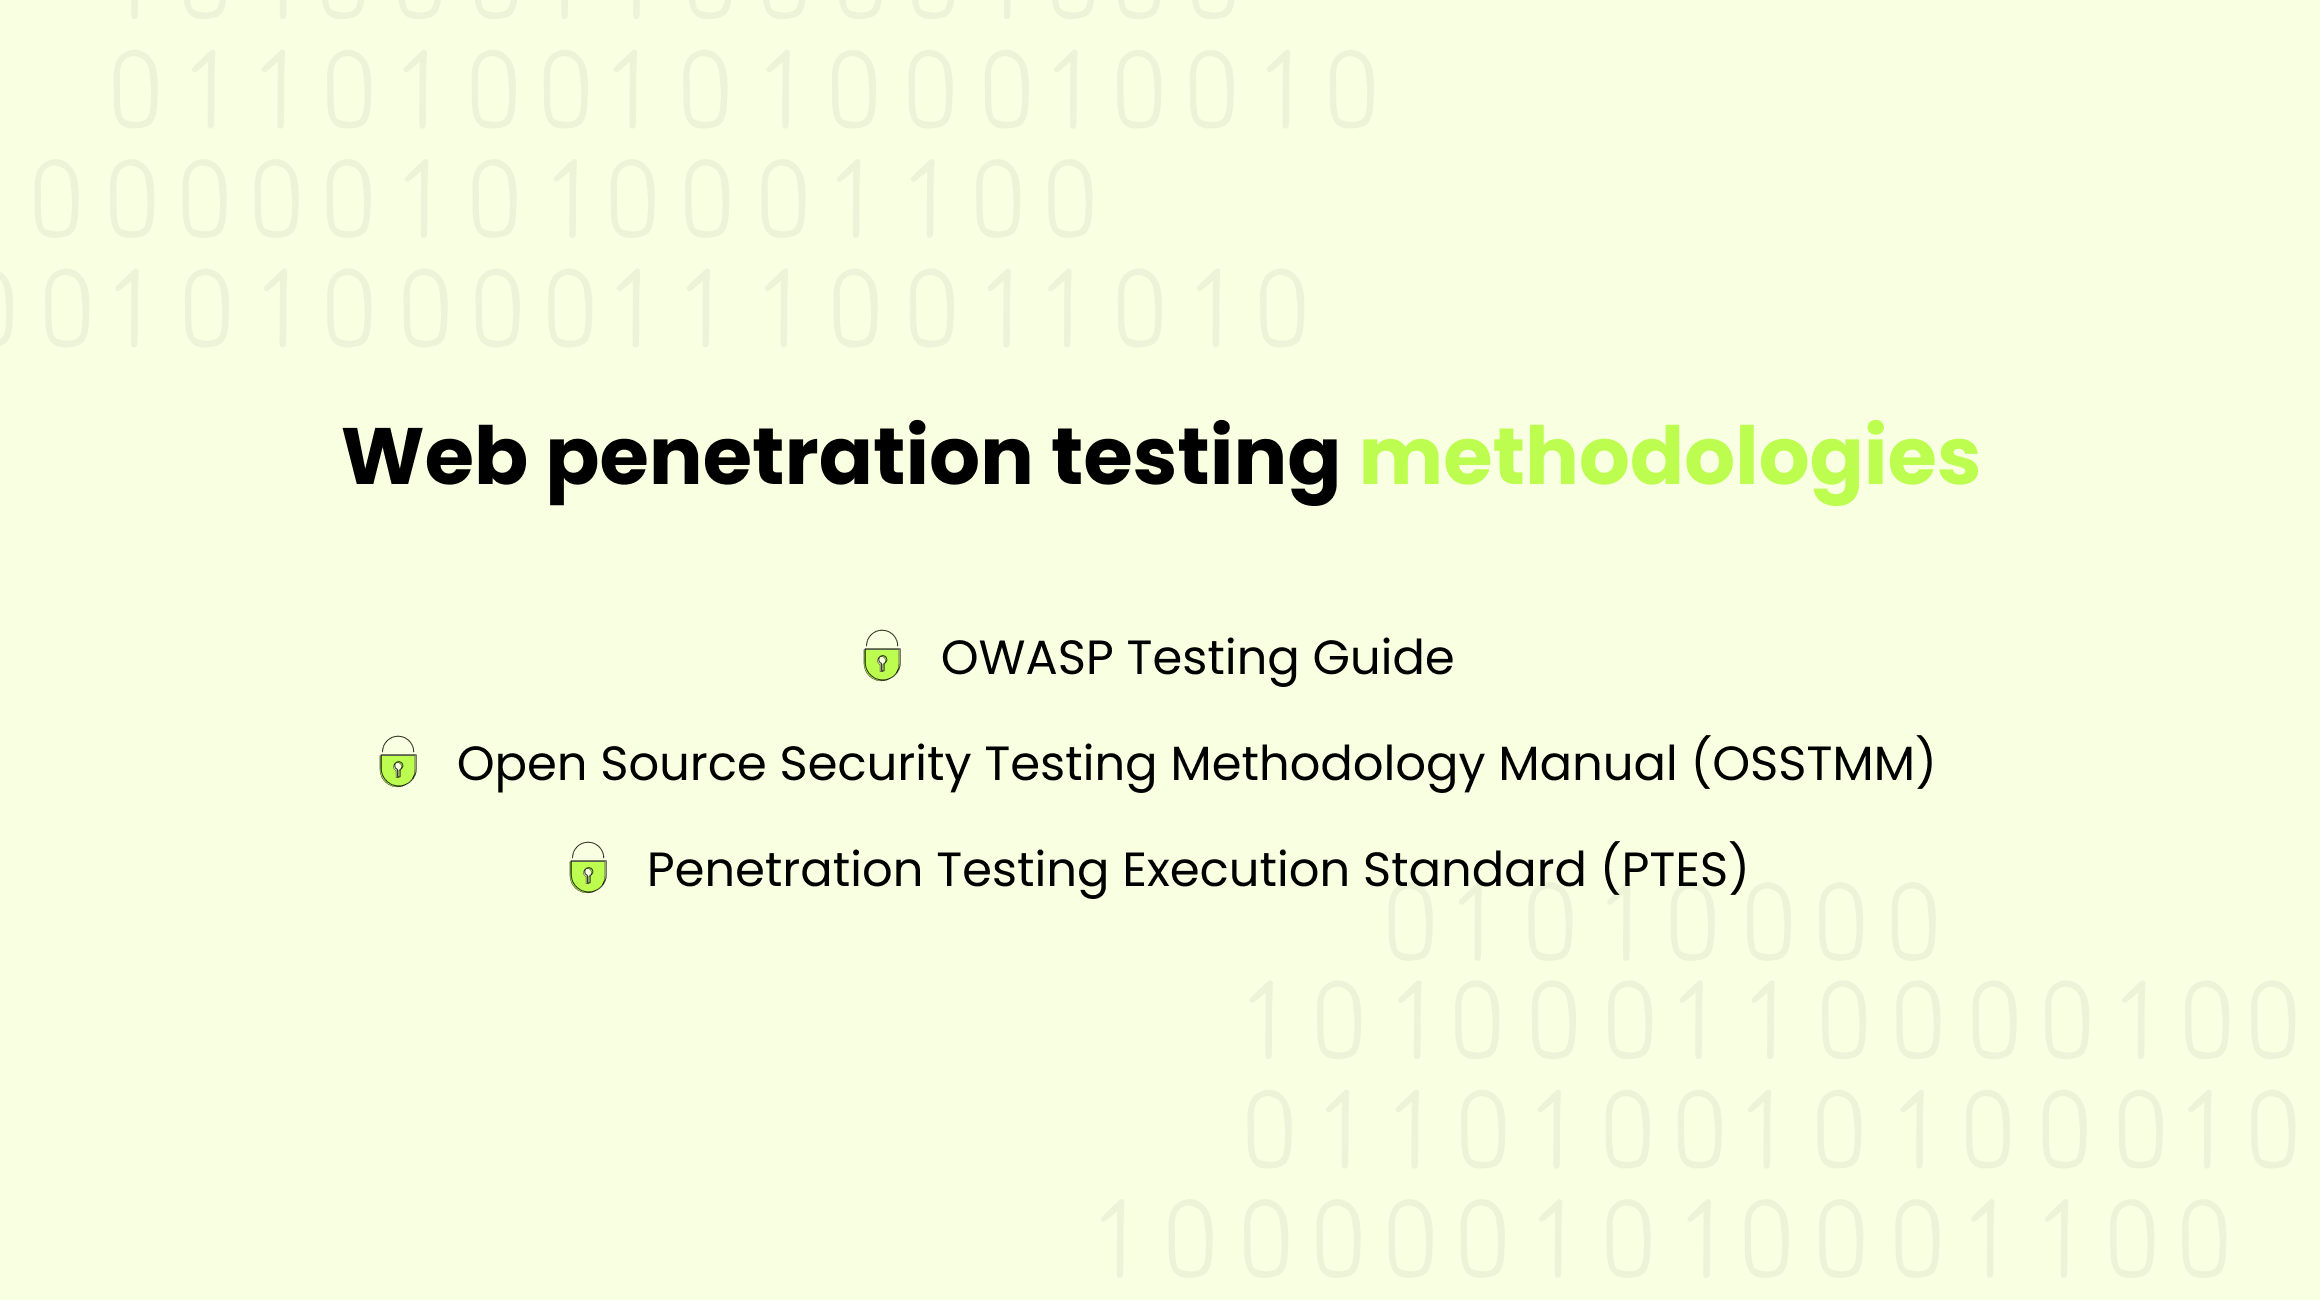 Penetration Testing Methodologies